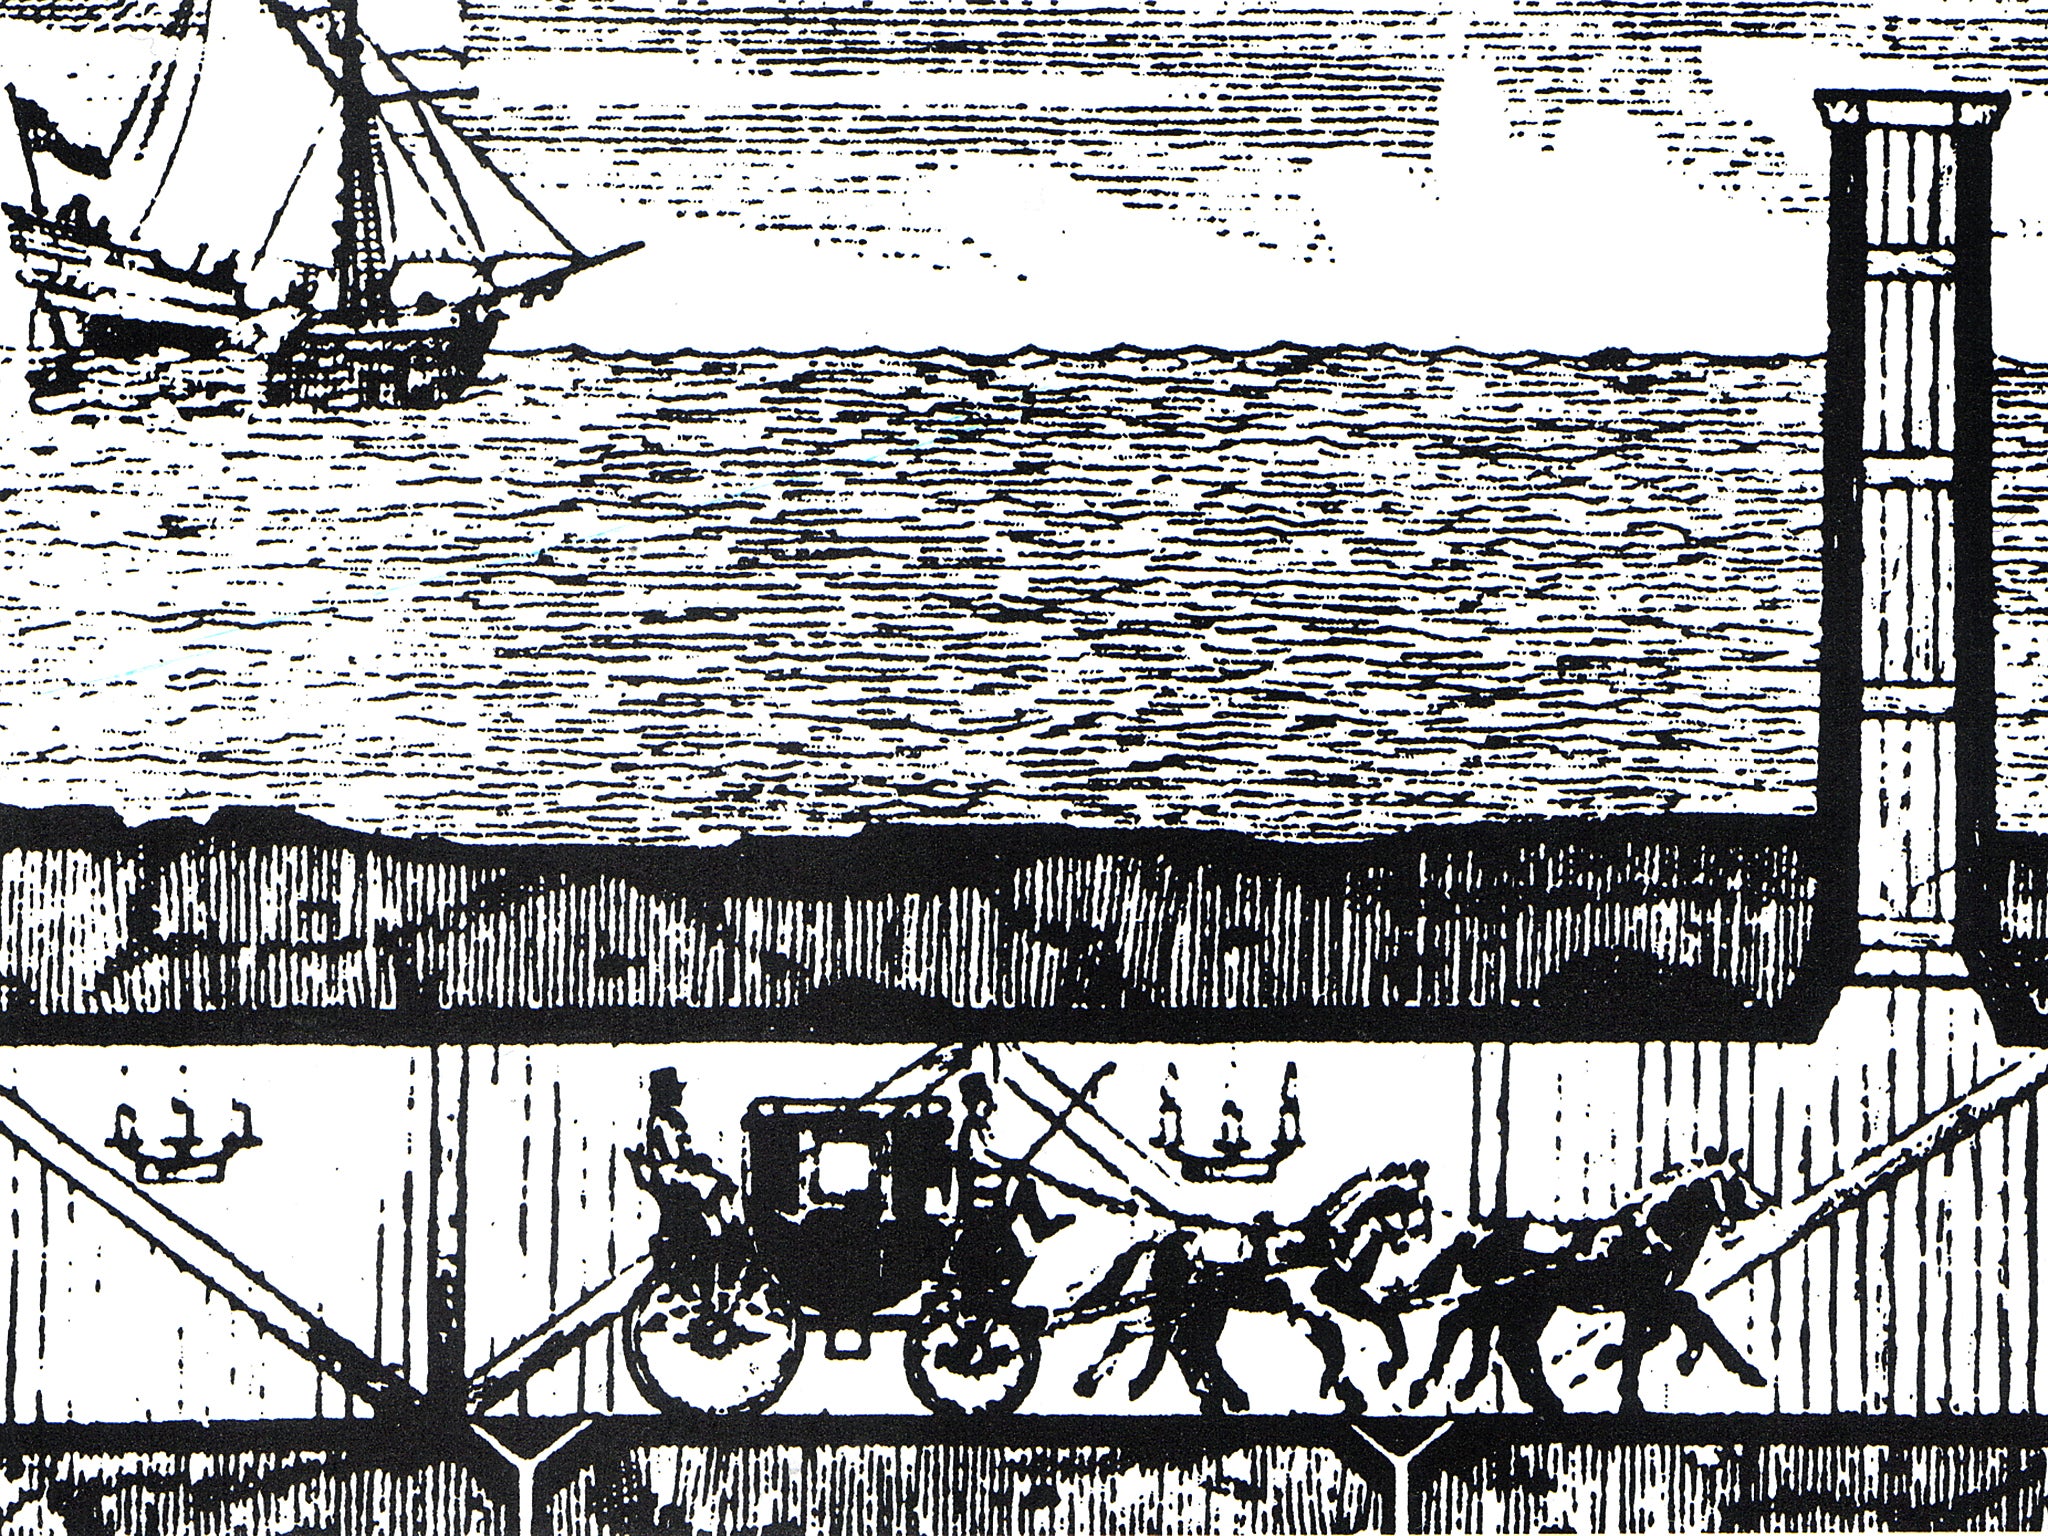 Albert Mathieu-Favier's 1802 proposal for a coach service beneath the Channel